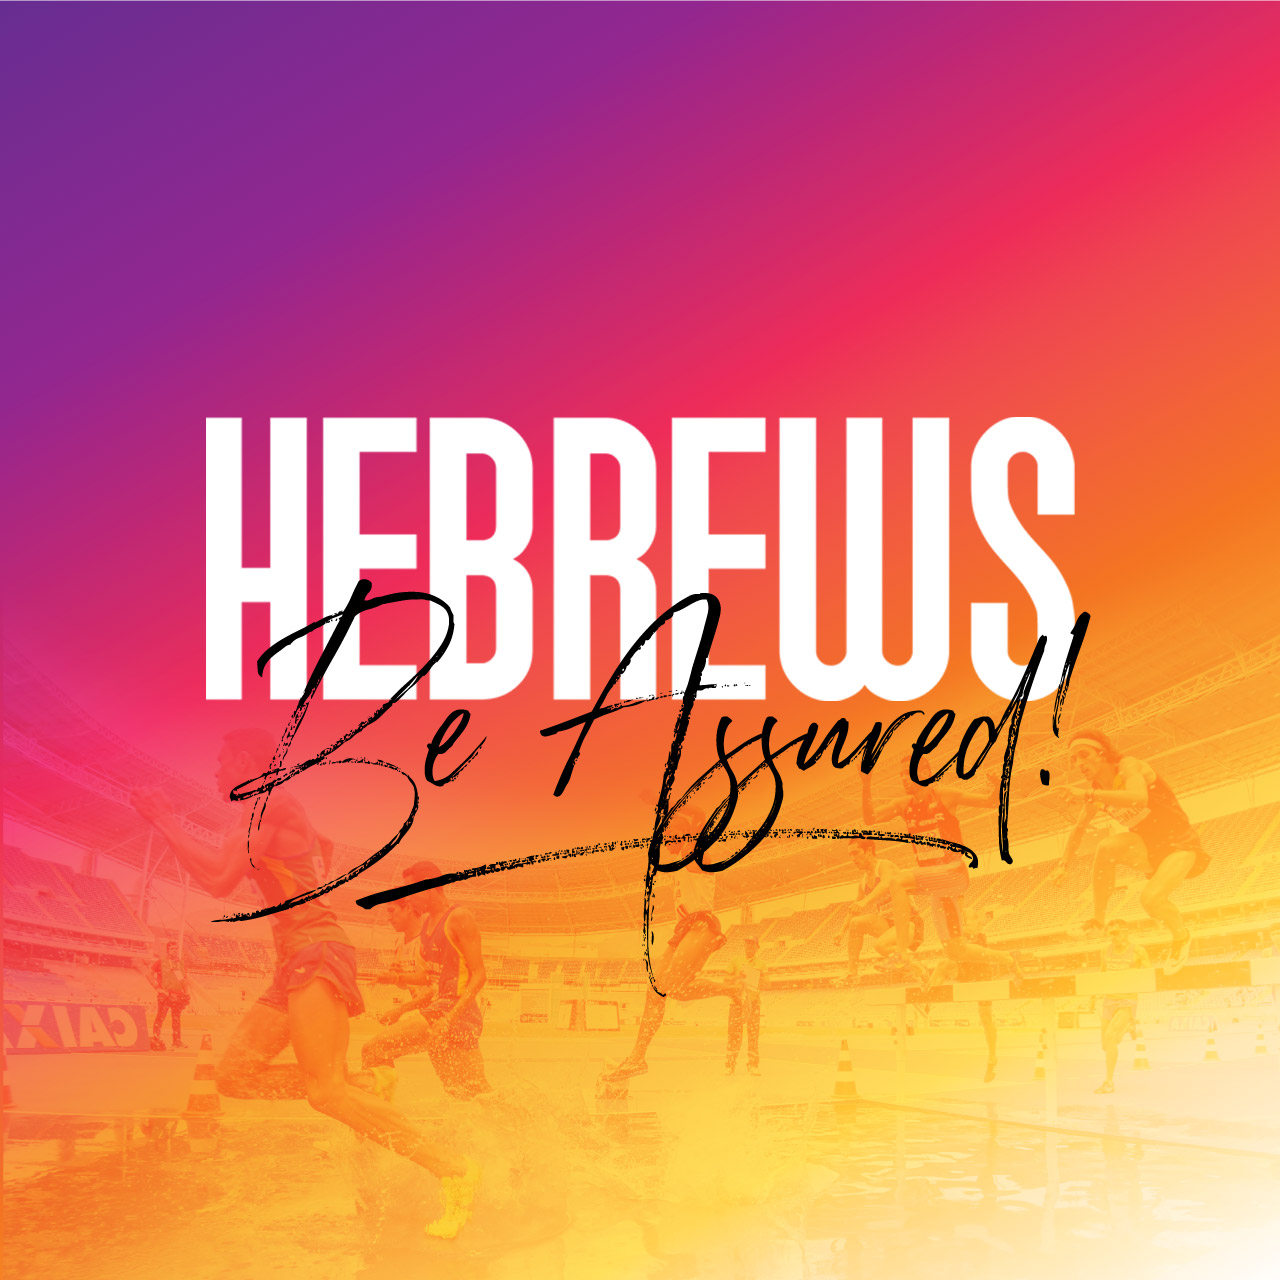 The Dangers of Sins (Hebrews 10:26-31)